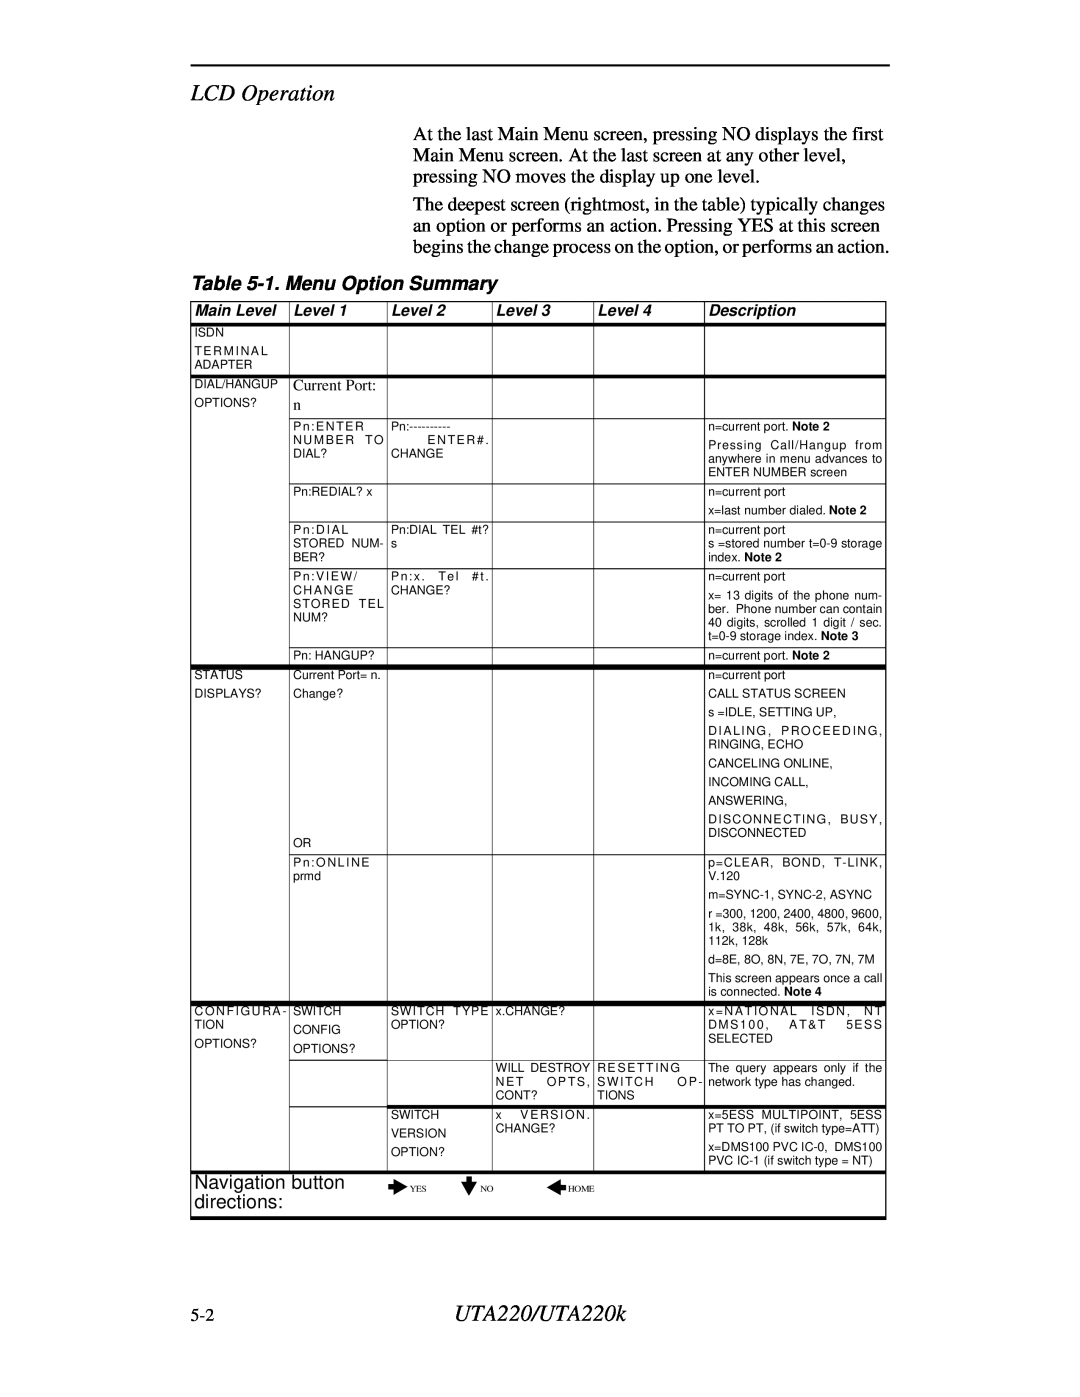 Northern UTA220/UTA220k manual 1. Menu Option Summary, LCD Operation, Main Level, Description 